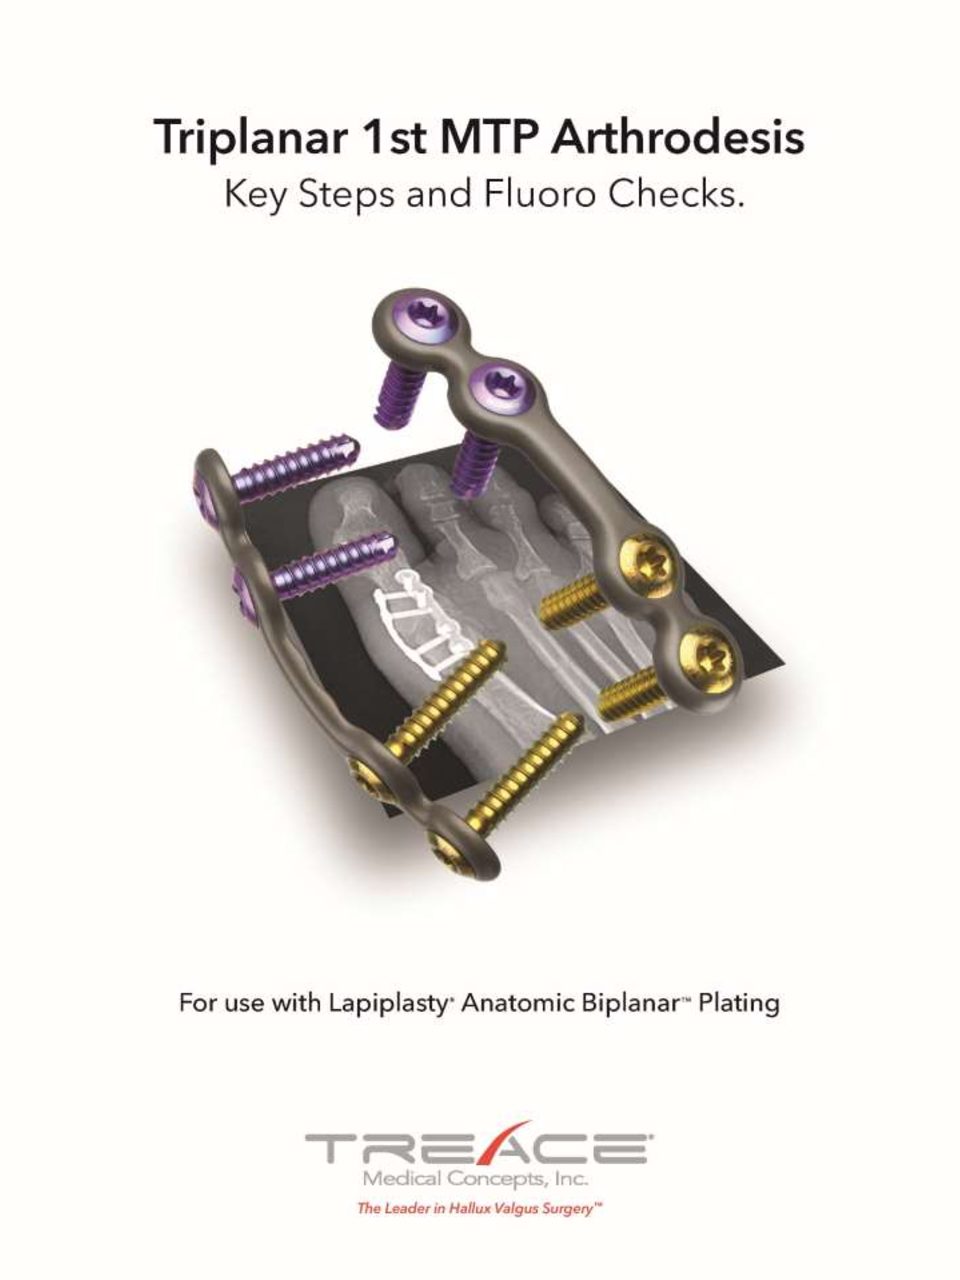 Triplanar 1st MTP Arthrodesis: Key Steps and Fluoro Checks